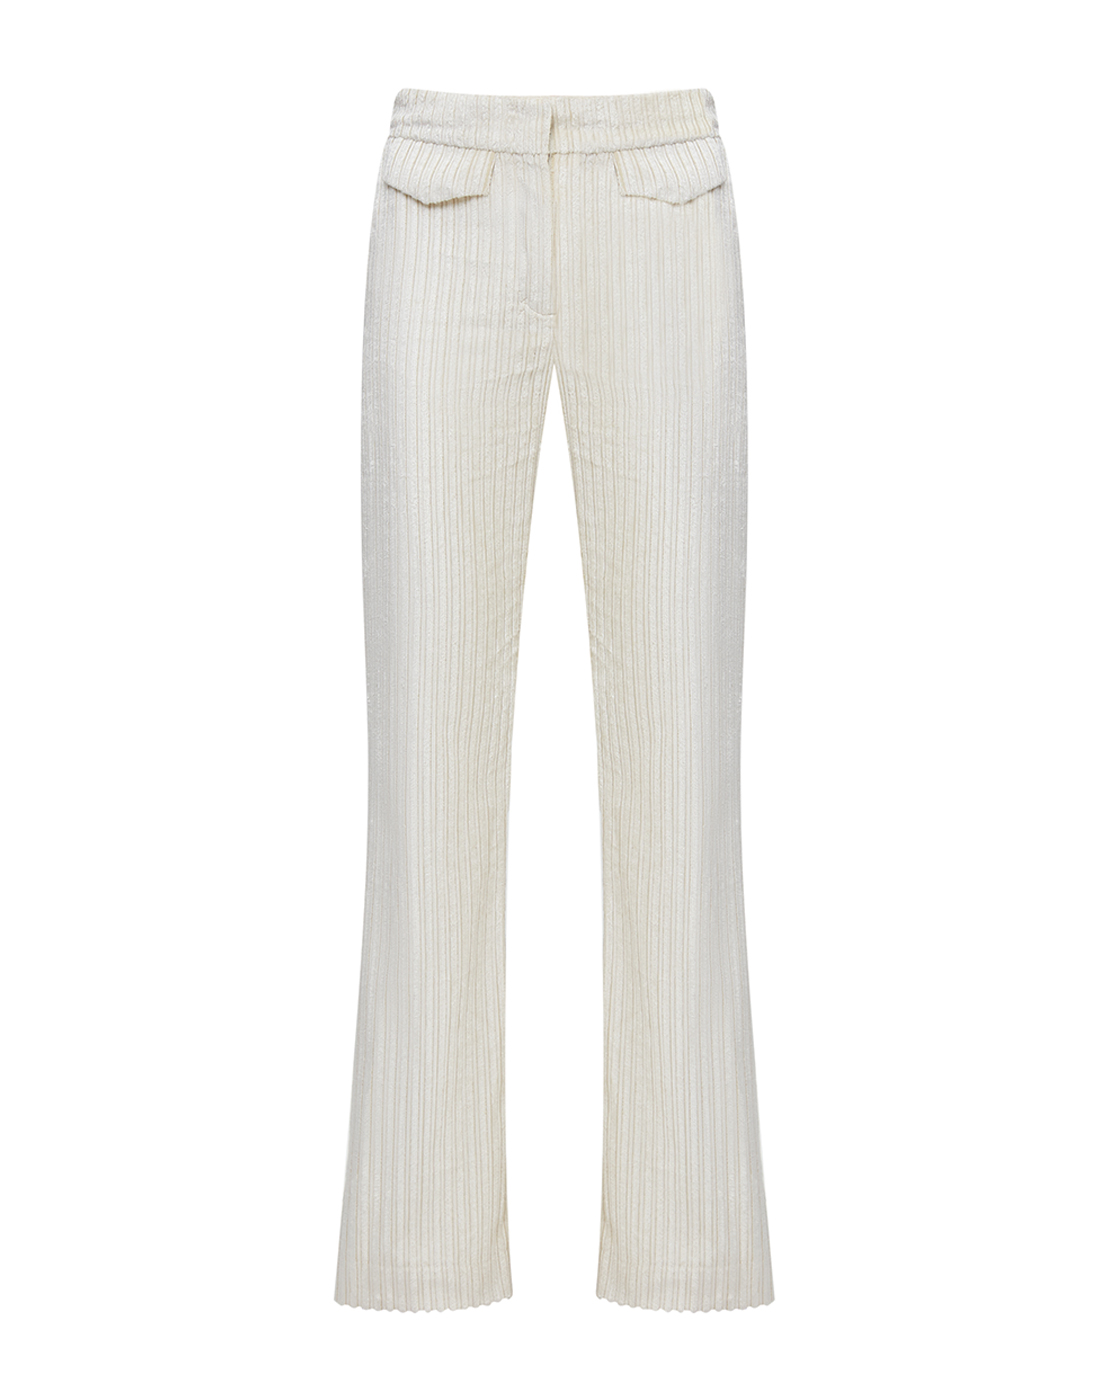 Женские белые брюки Dorothee Schumacher S943303/112-1